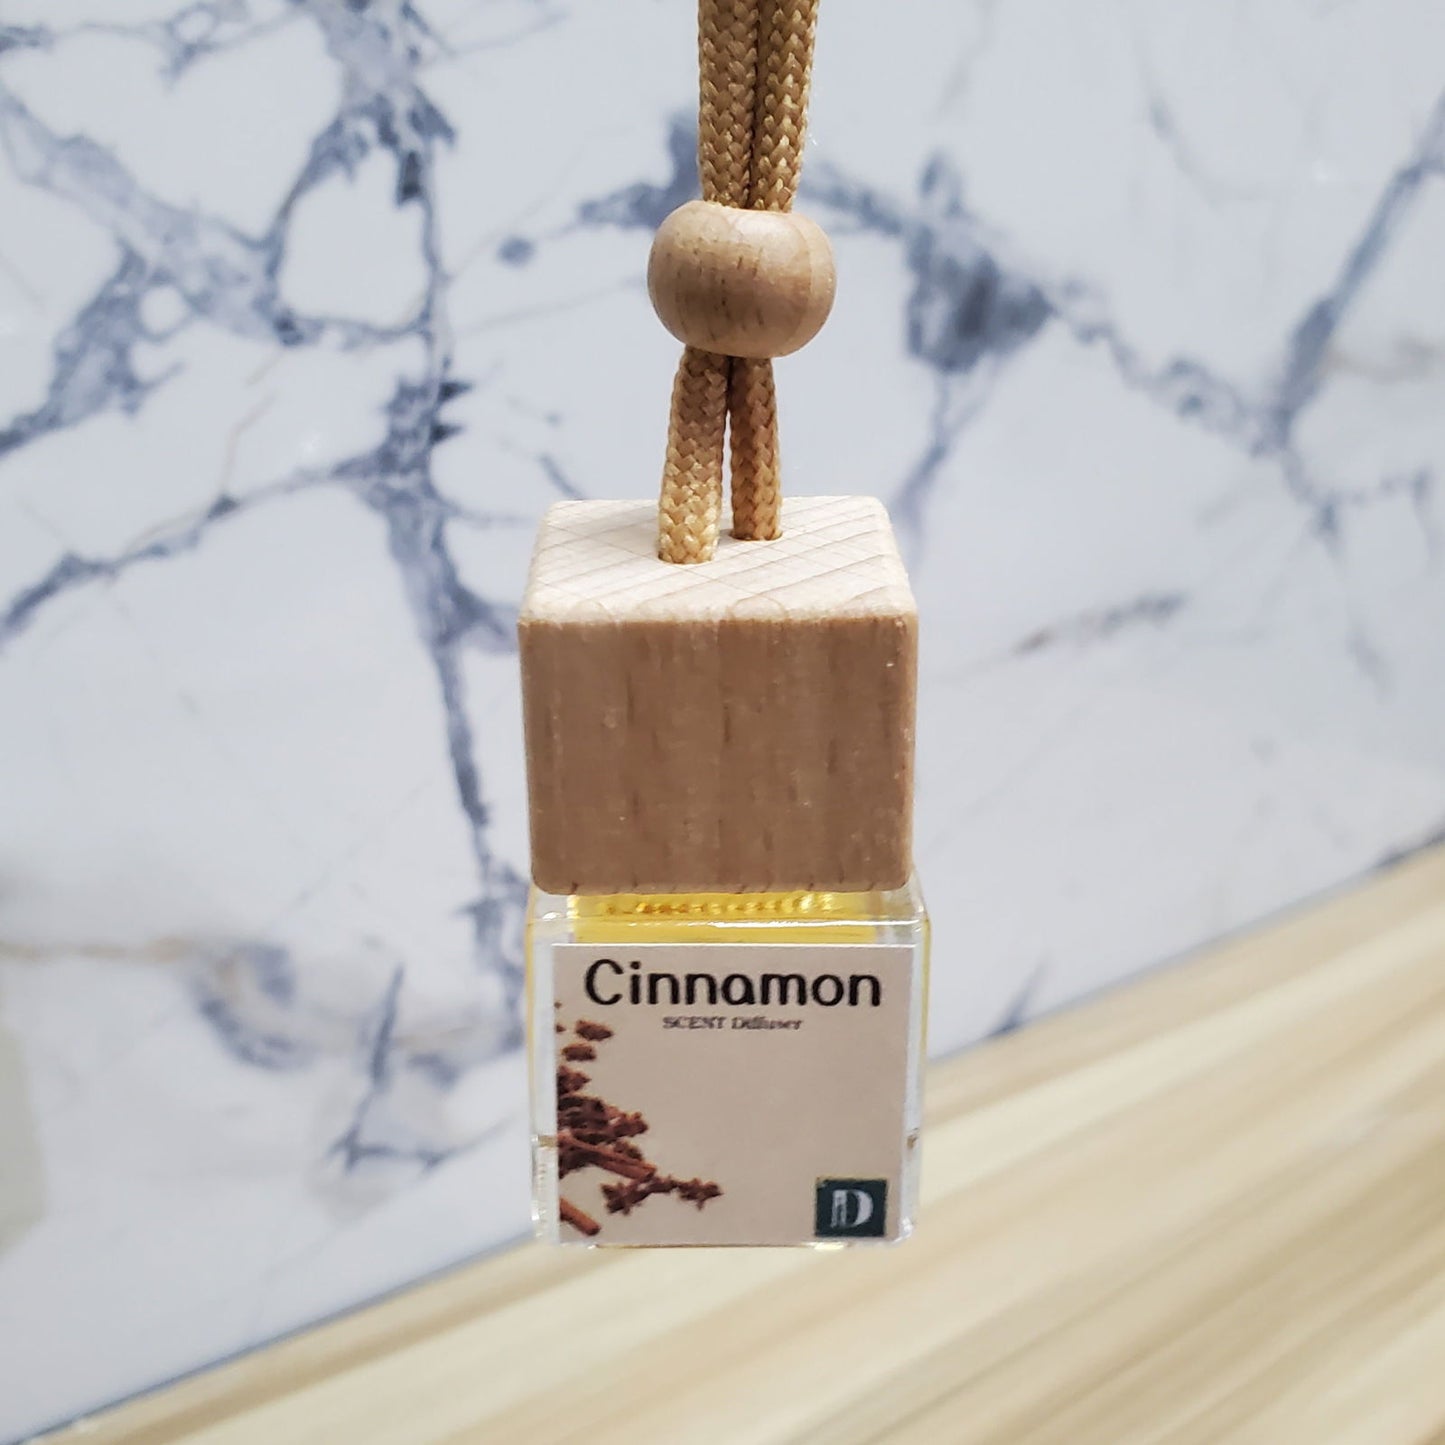 Cinnamon SCENT Diffuser (Car/Air Freshener) - D SCENT 